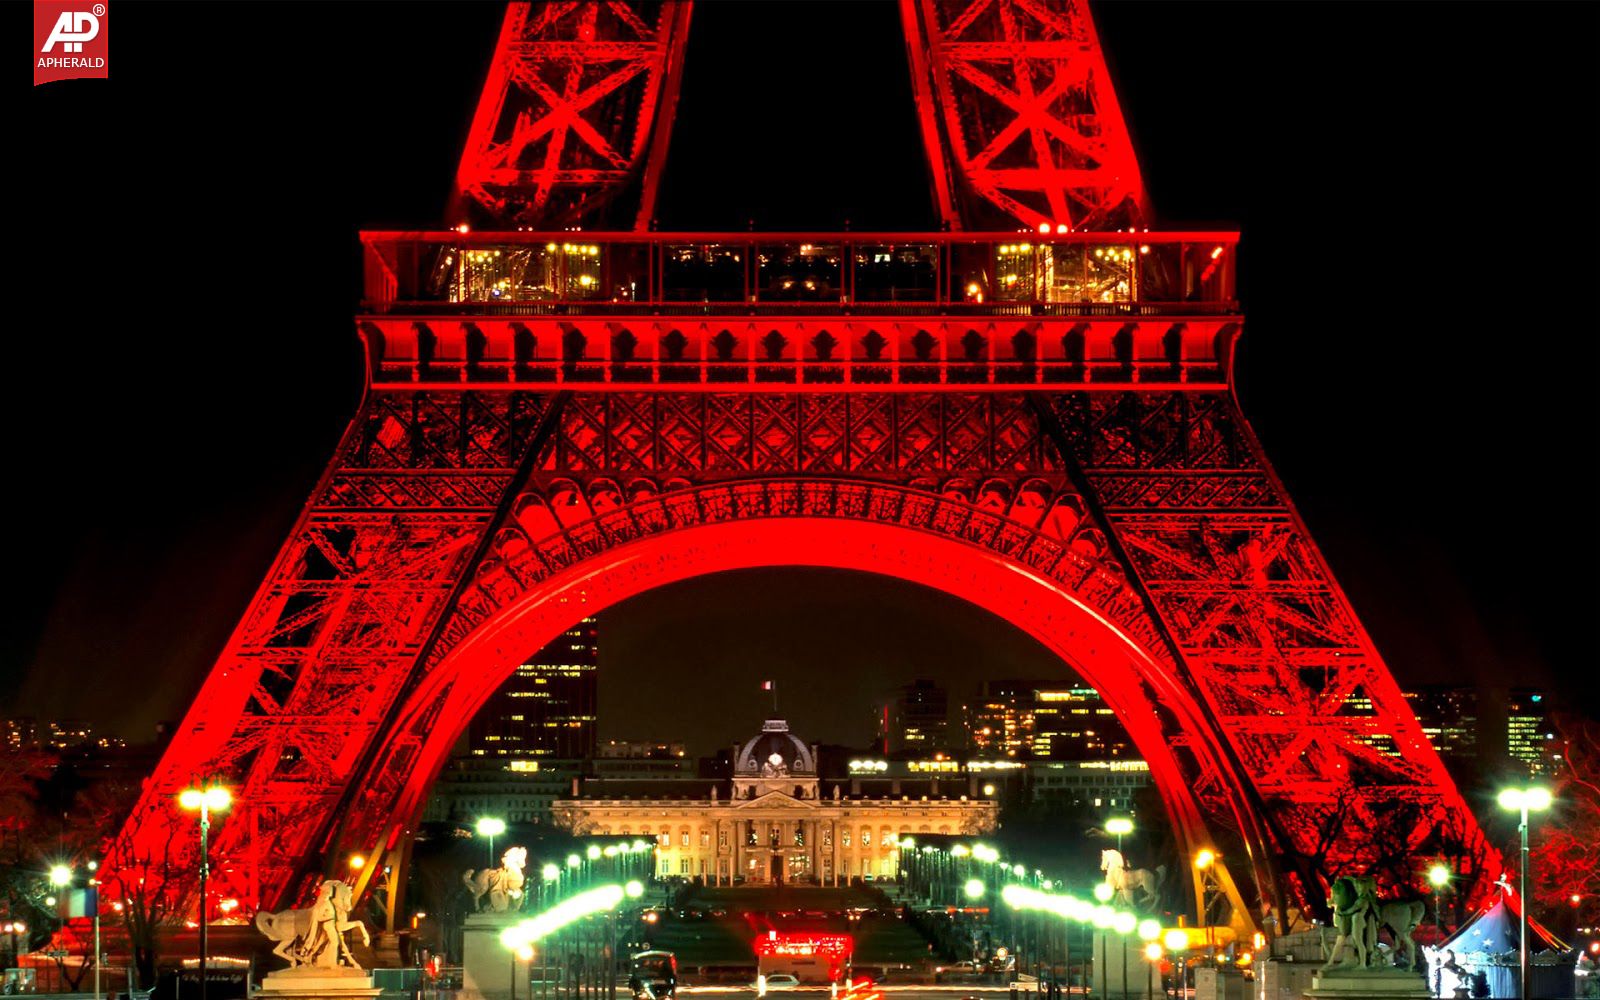 FEEL GOOD : Paris Eiffel Tower Photos